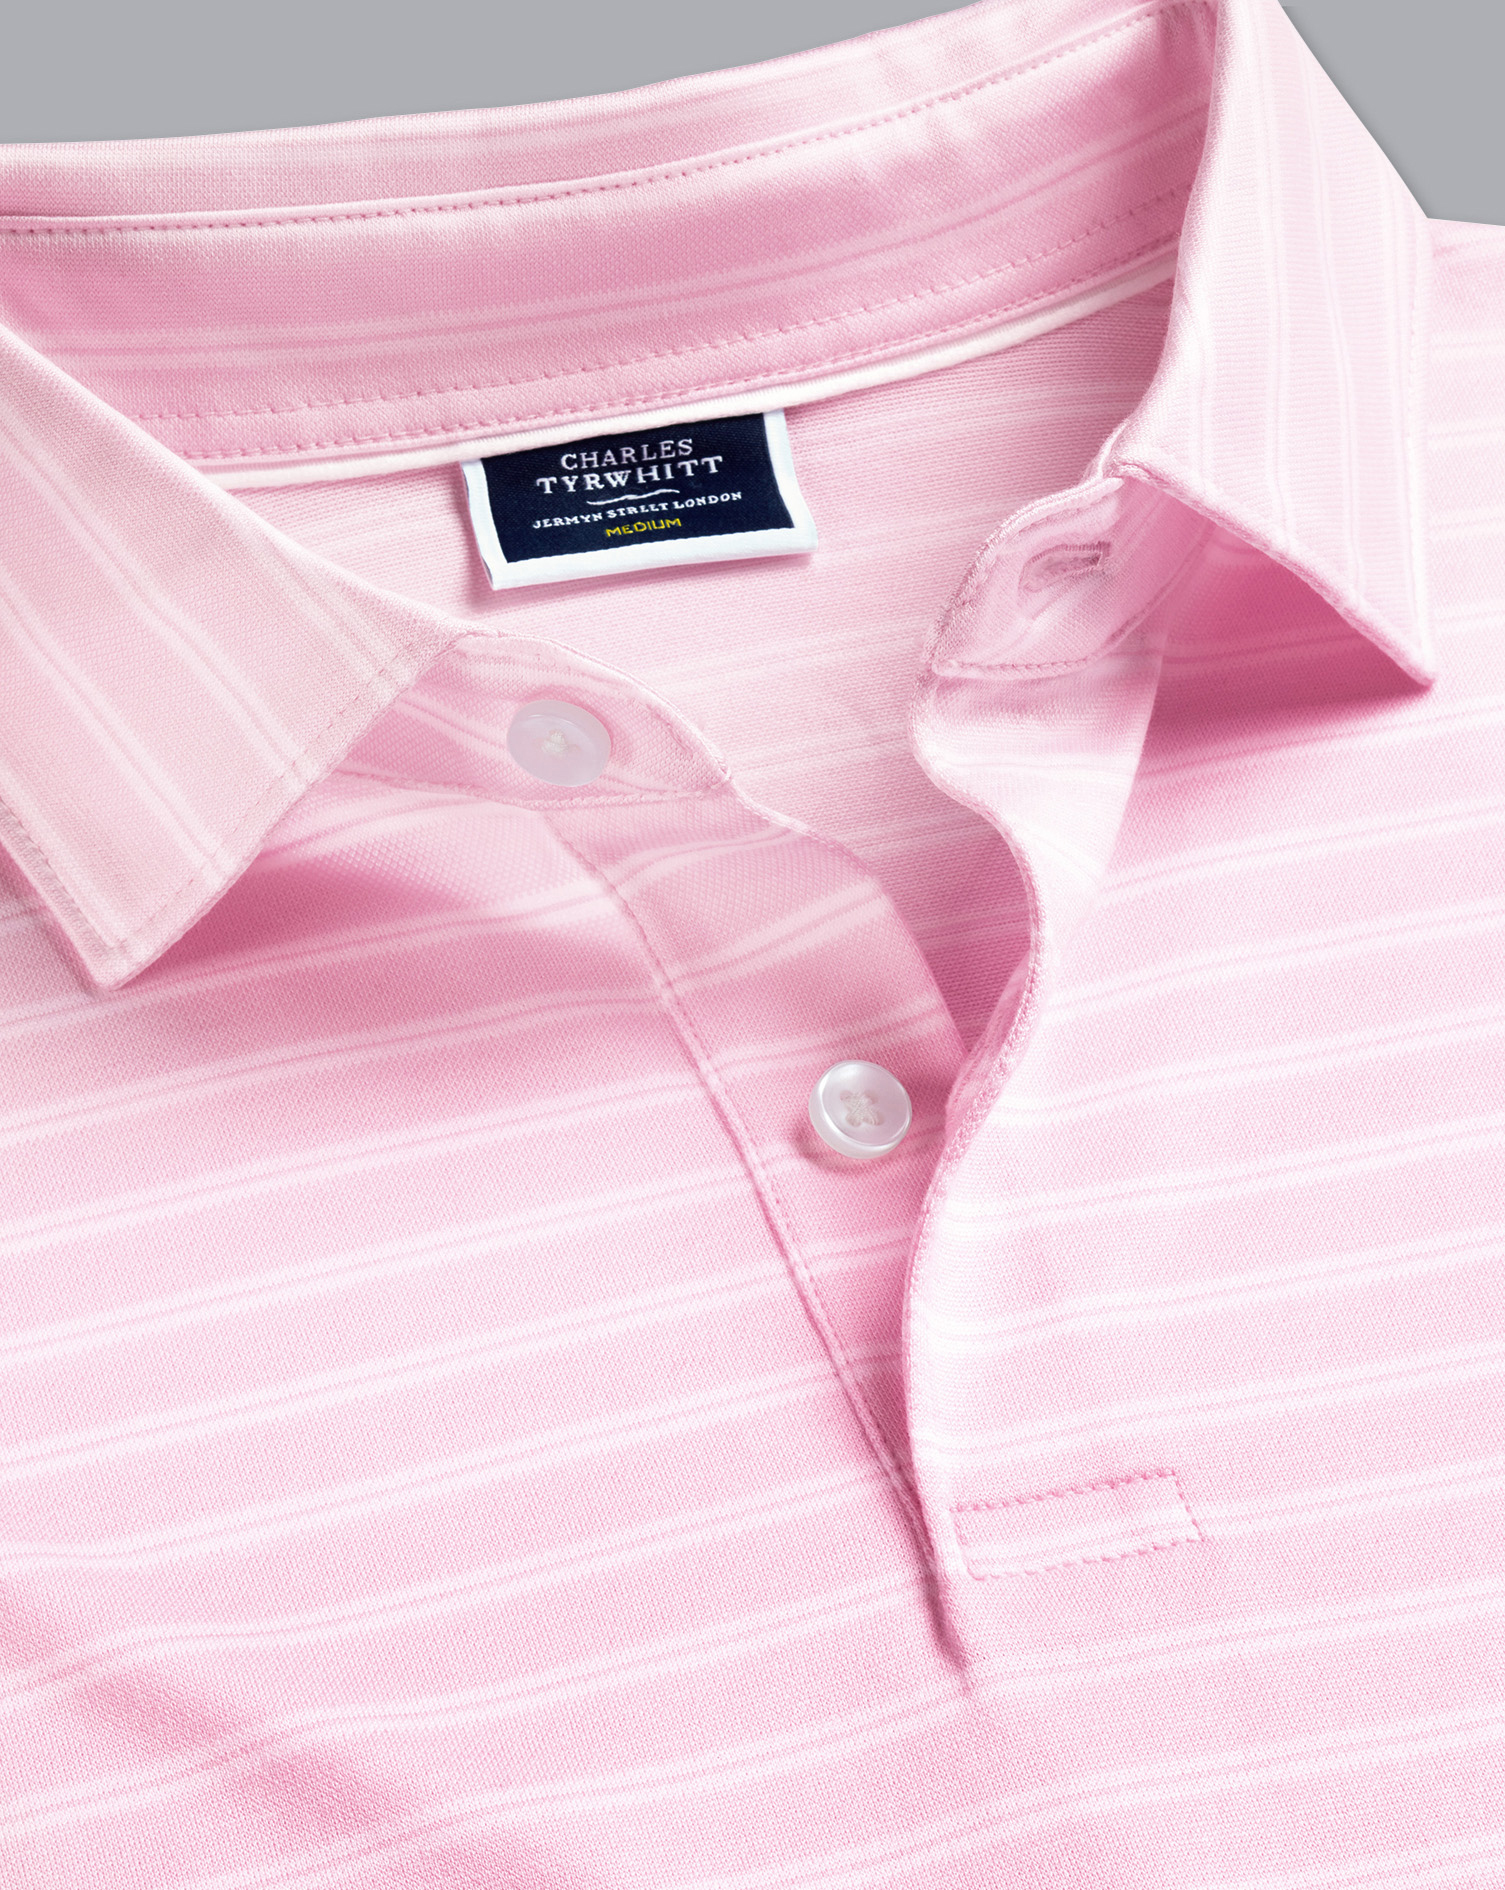 Jacquard Stripe Cotton Polo - Light Pink Size Large
